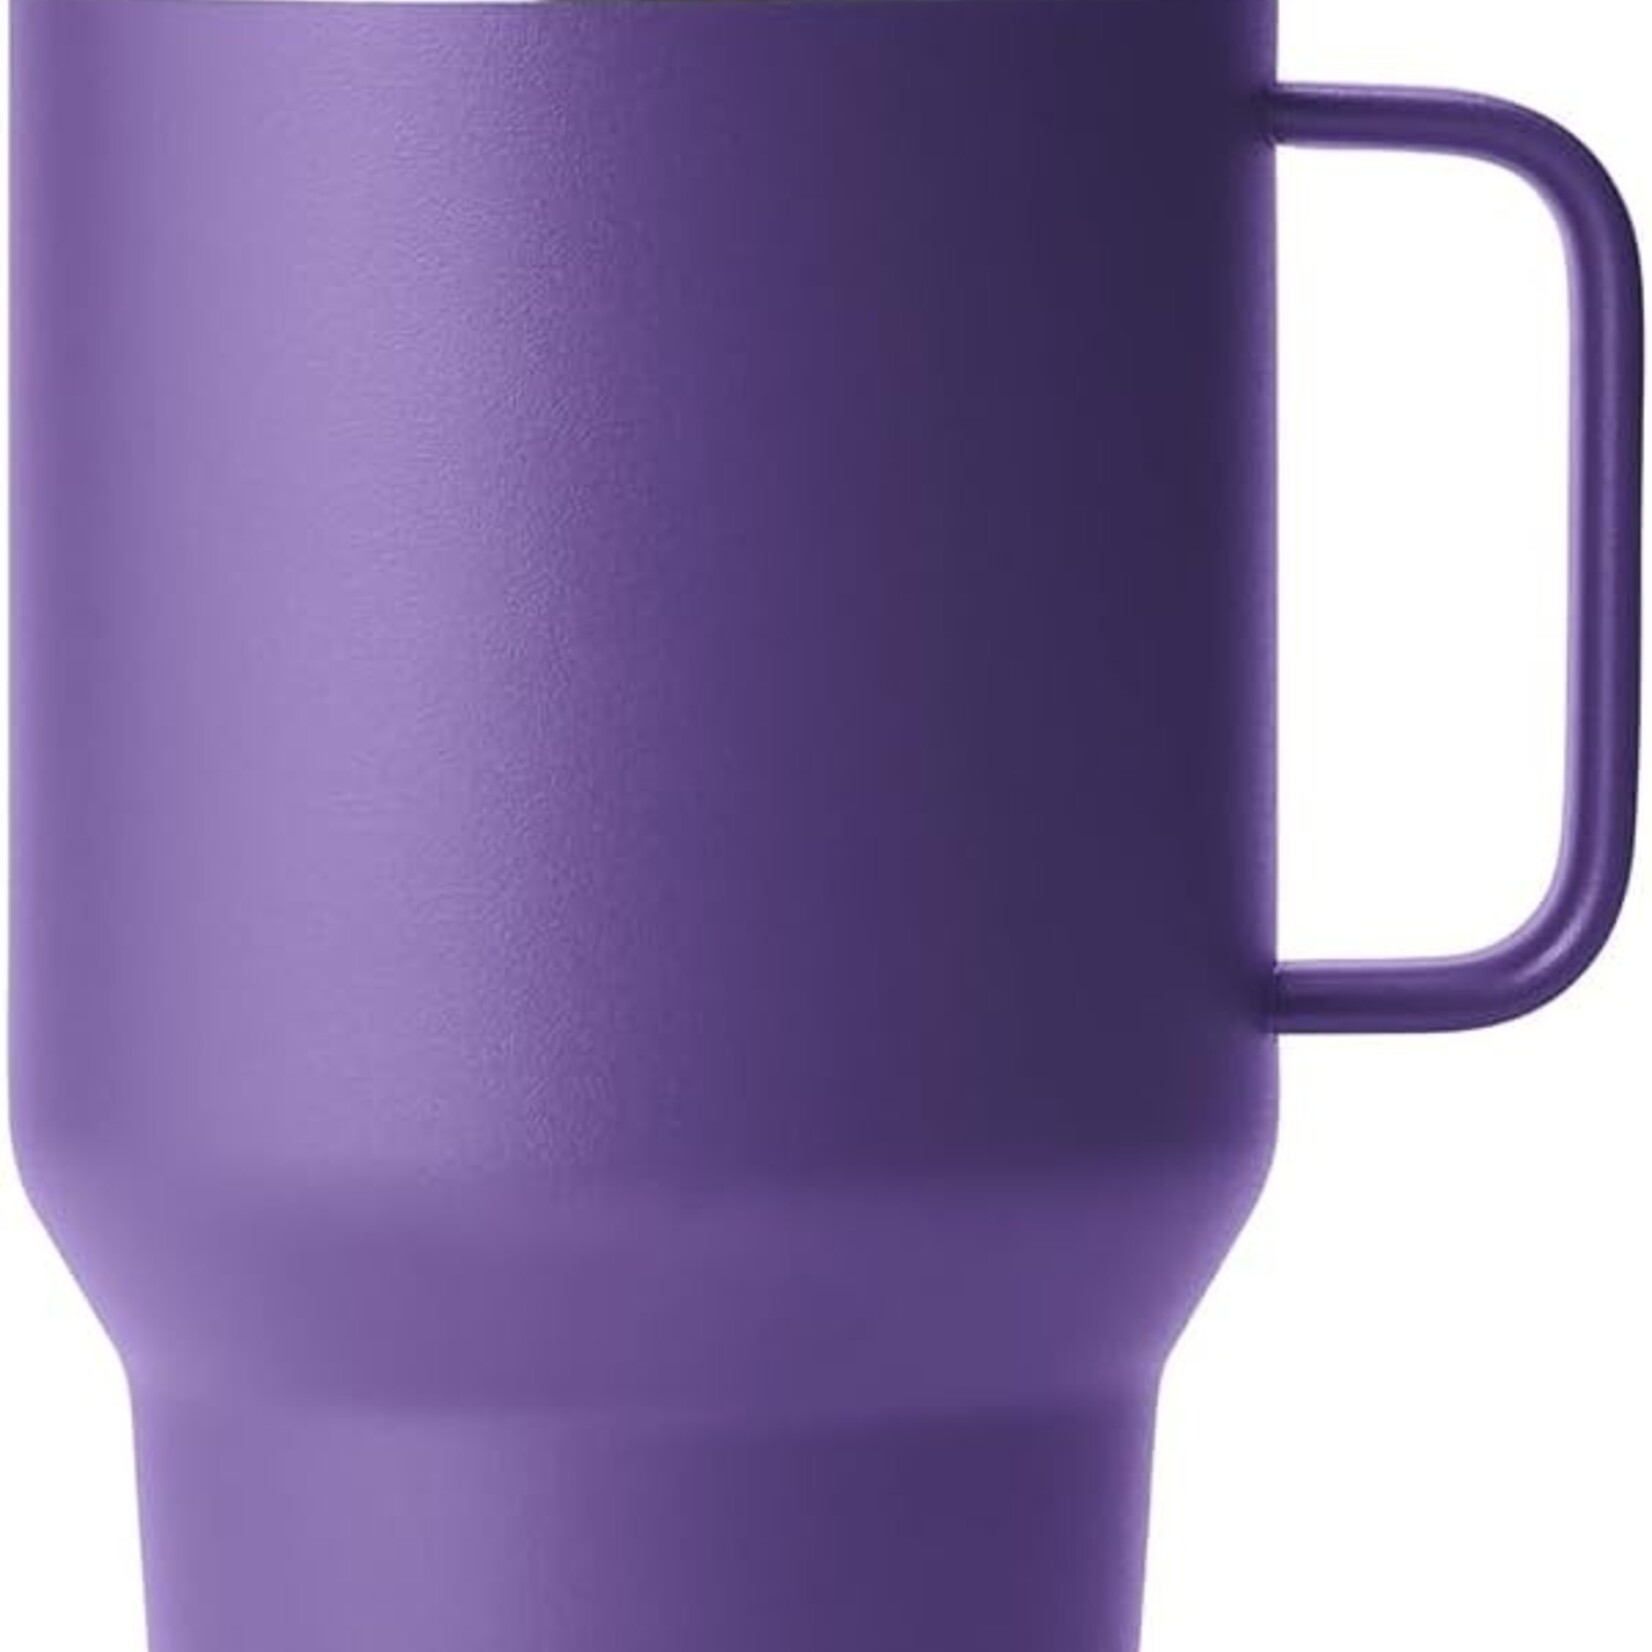 Mighty Mug® Purple Travel Mug with Straw